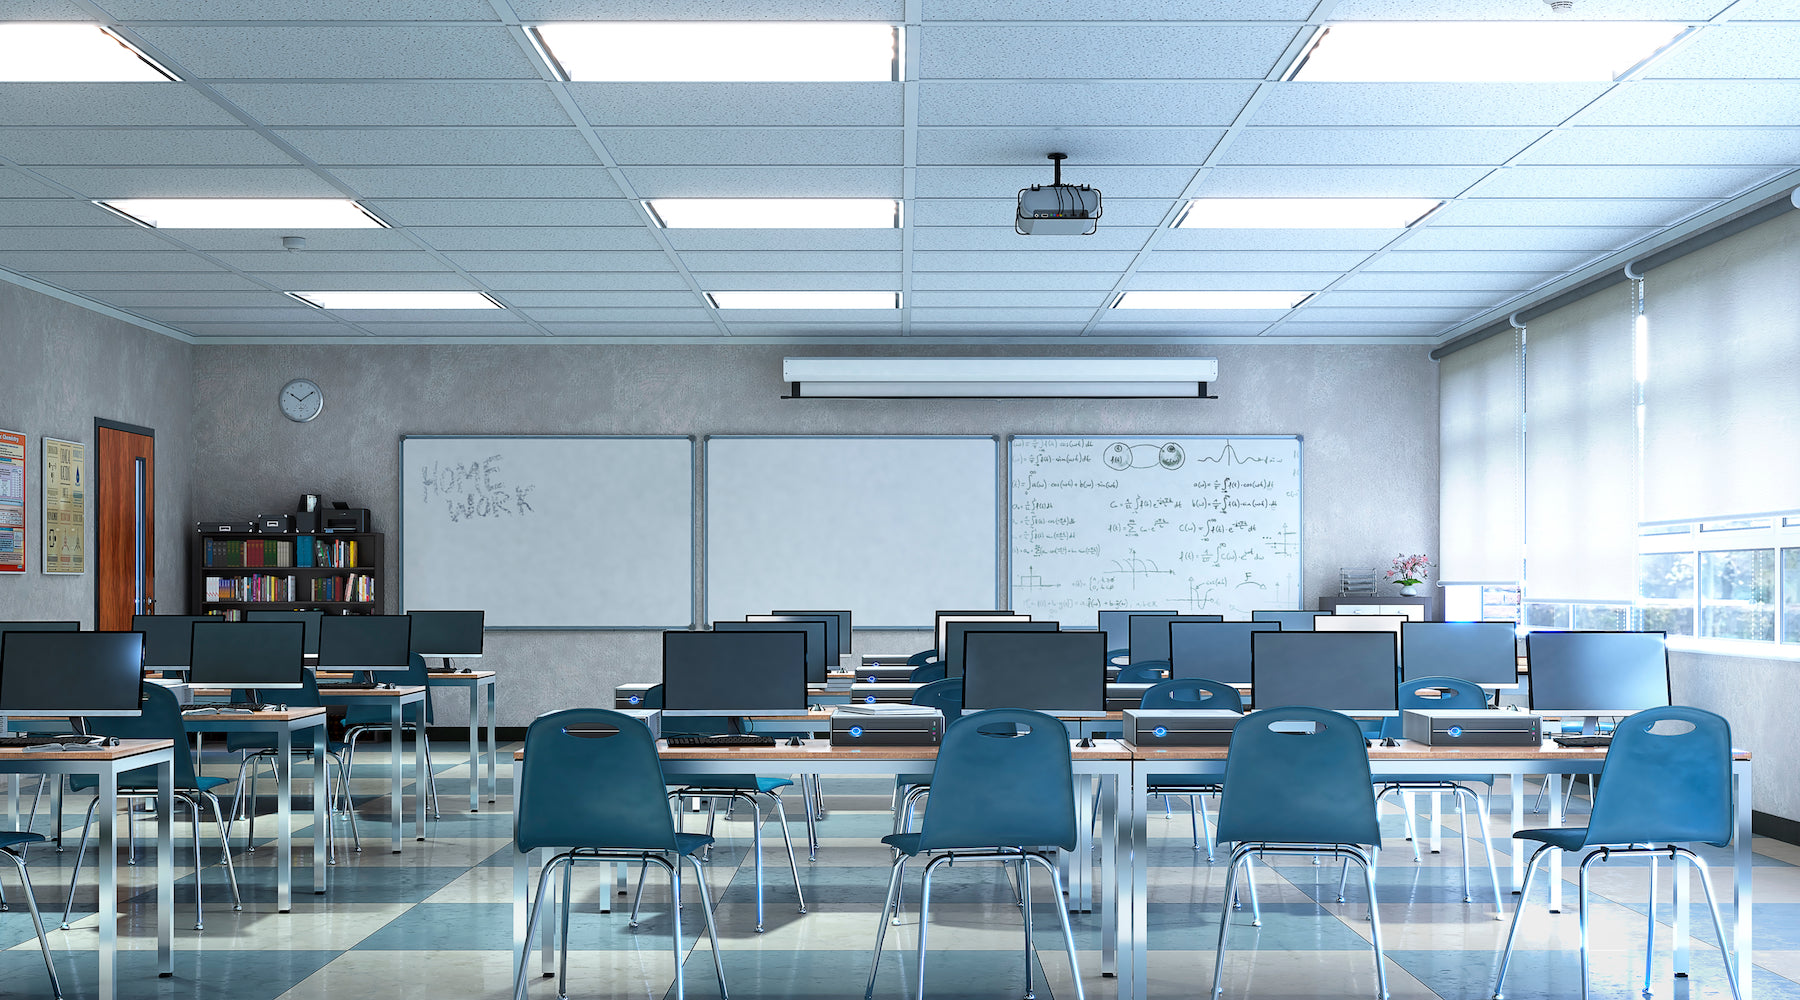 Classroom lighting installed in ceiling of empty high school classroom